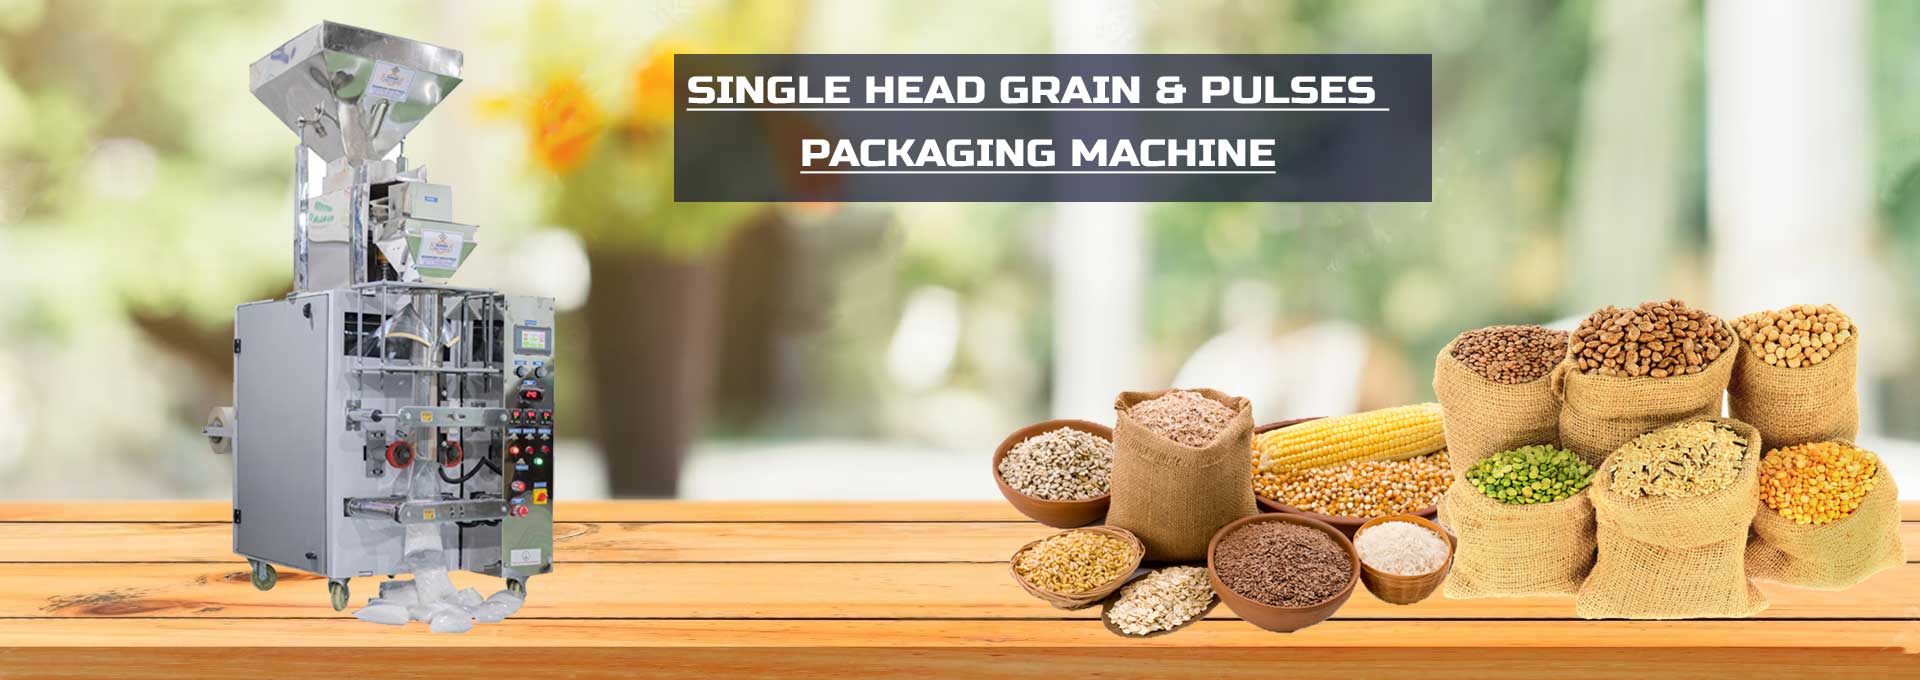 Single Head Grains & Pulses Packaging Machine Manufacturers